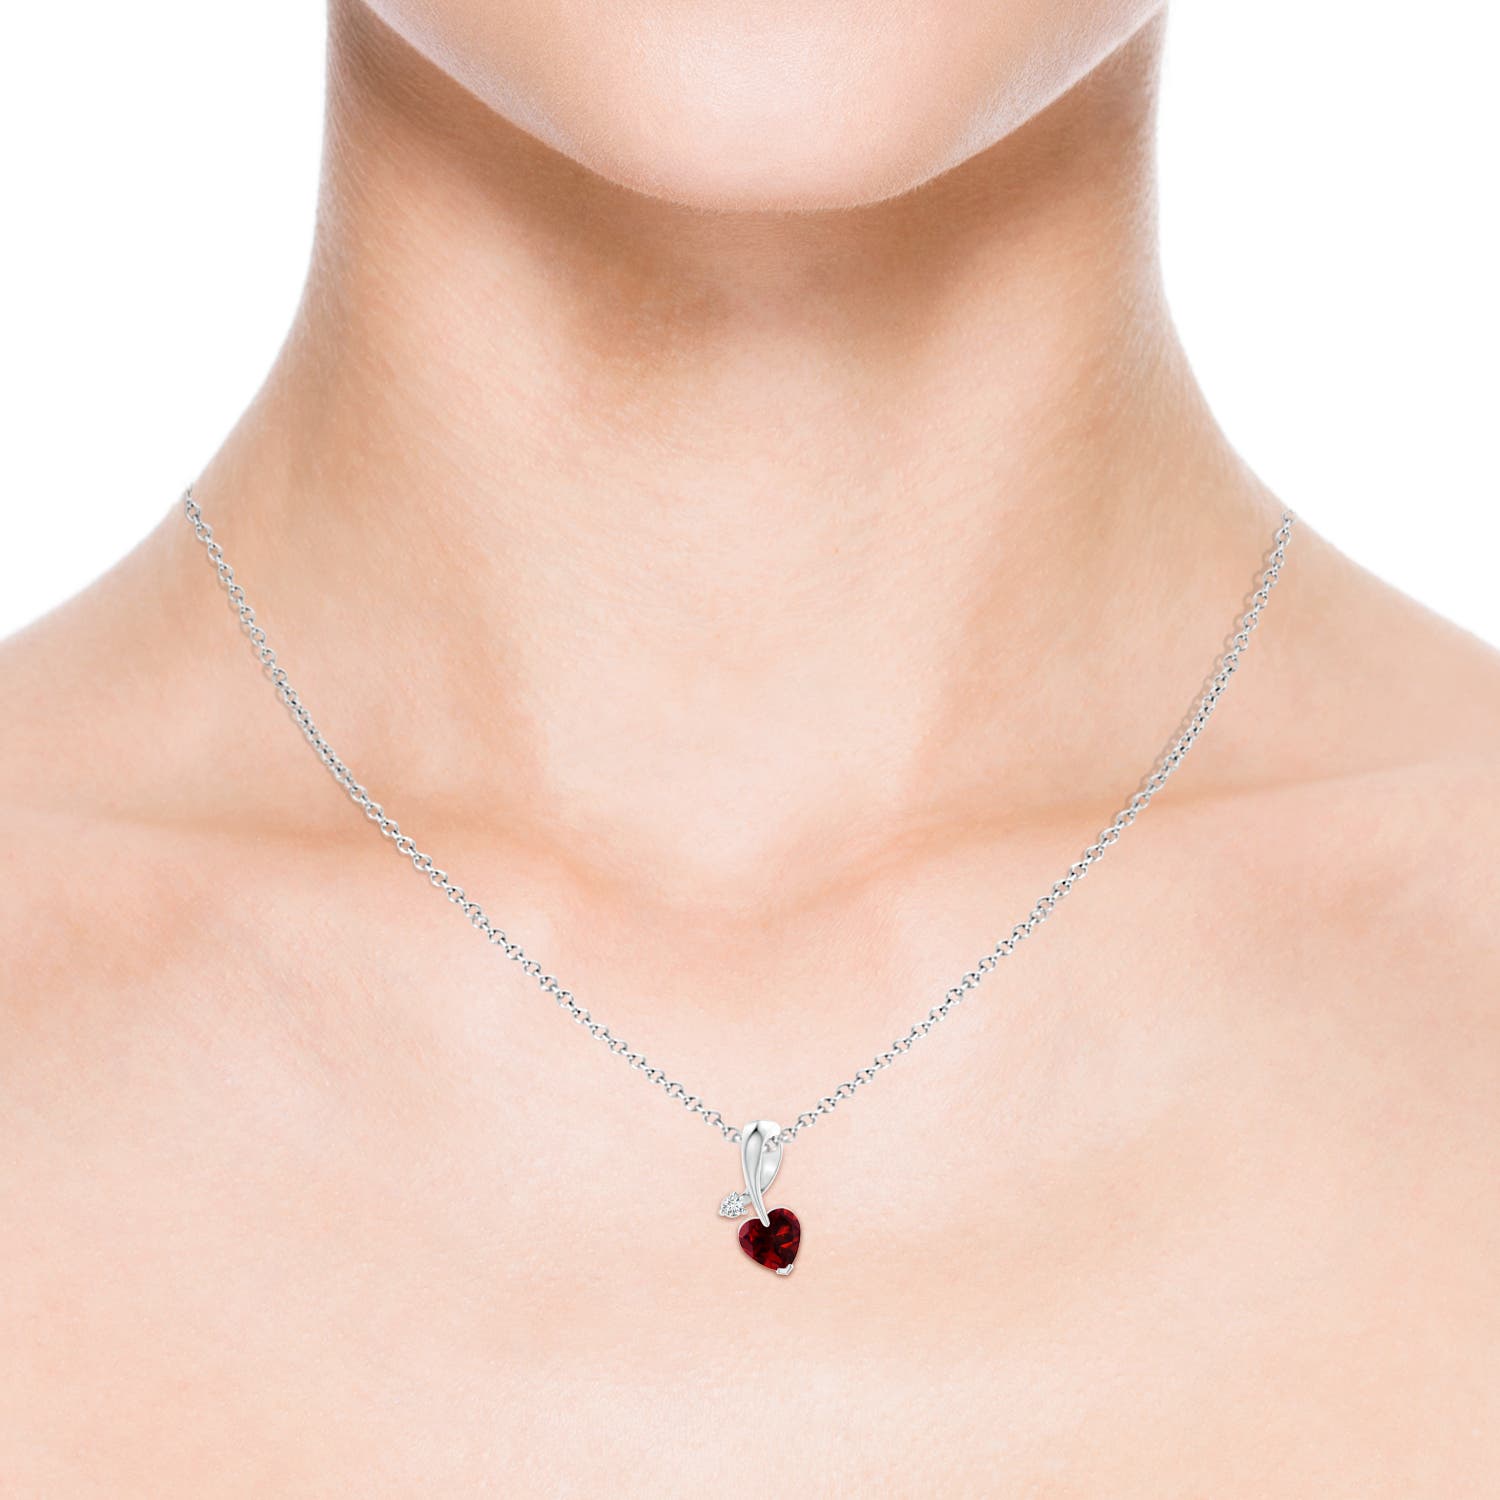 Garnet Glowing Heart Necklace - 14K Yellow Gold |JewelsForMe